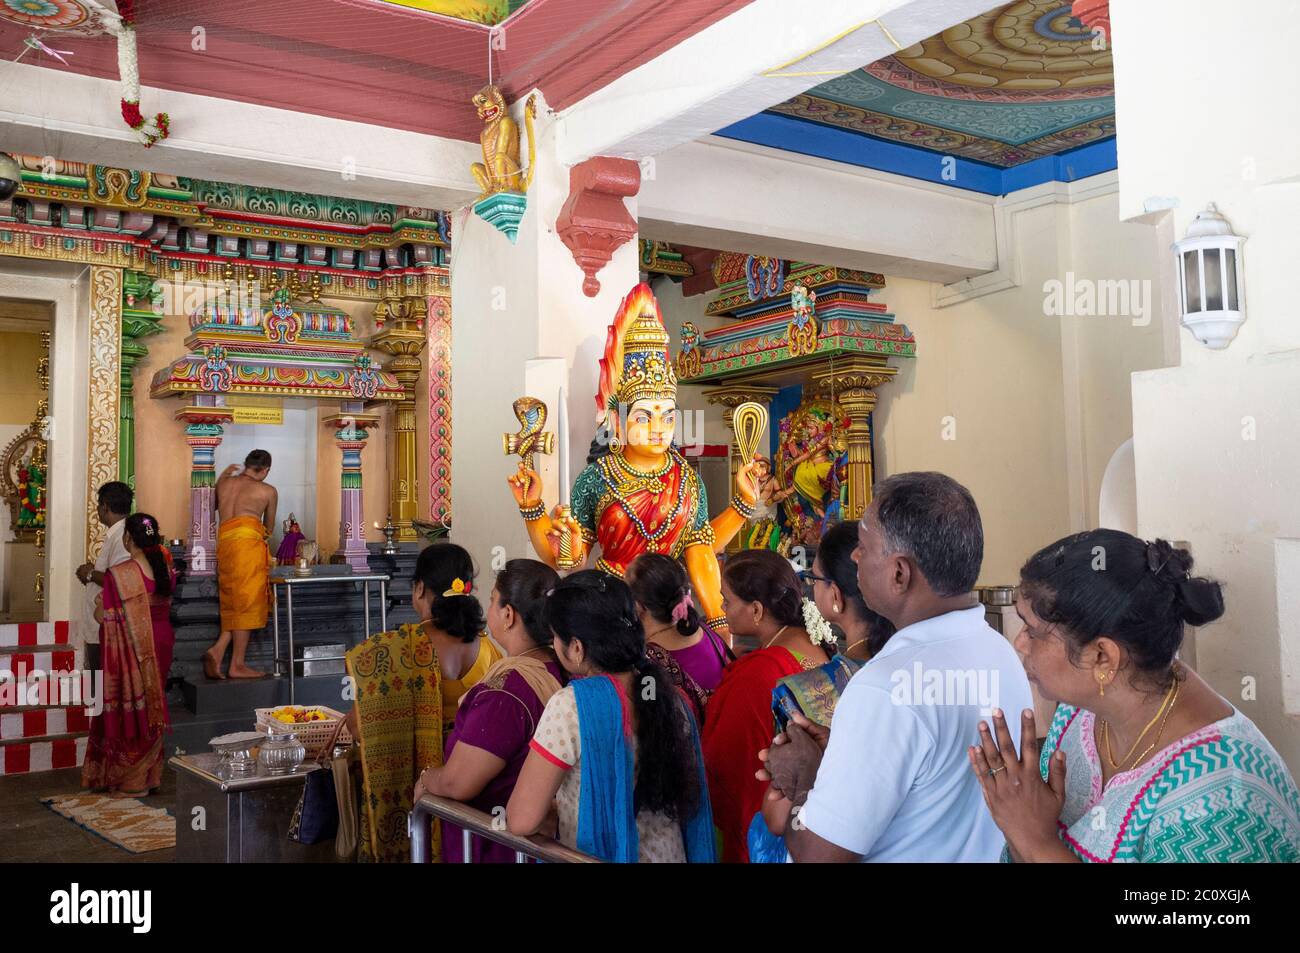 Hindu religious ceremony. Sri Mariamman Temple. Chinatown. Singapore Stock Photo